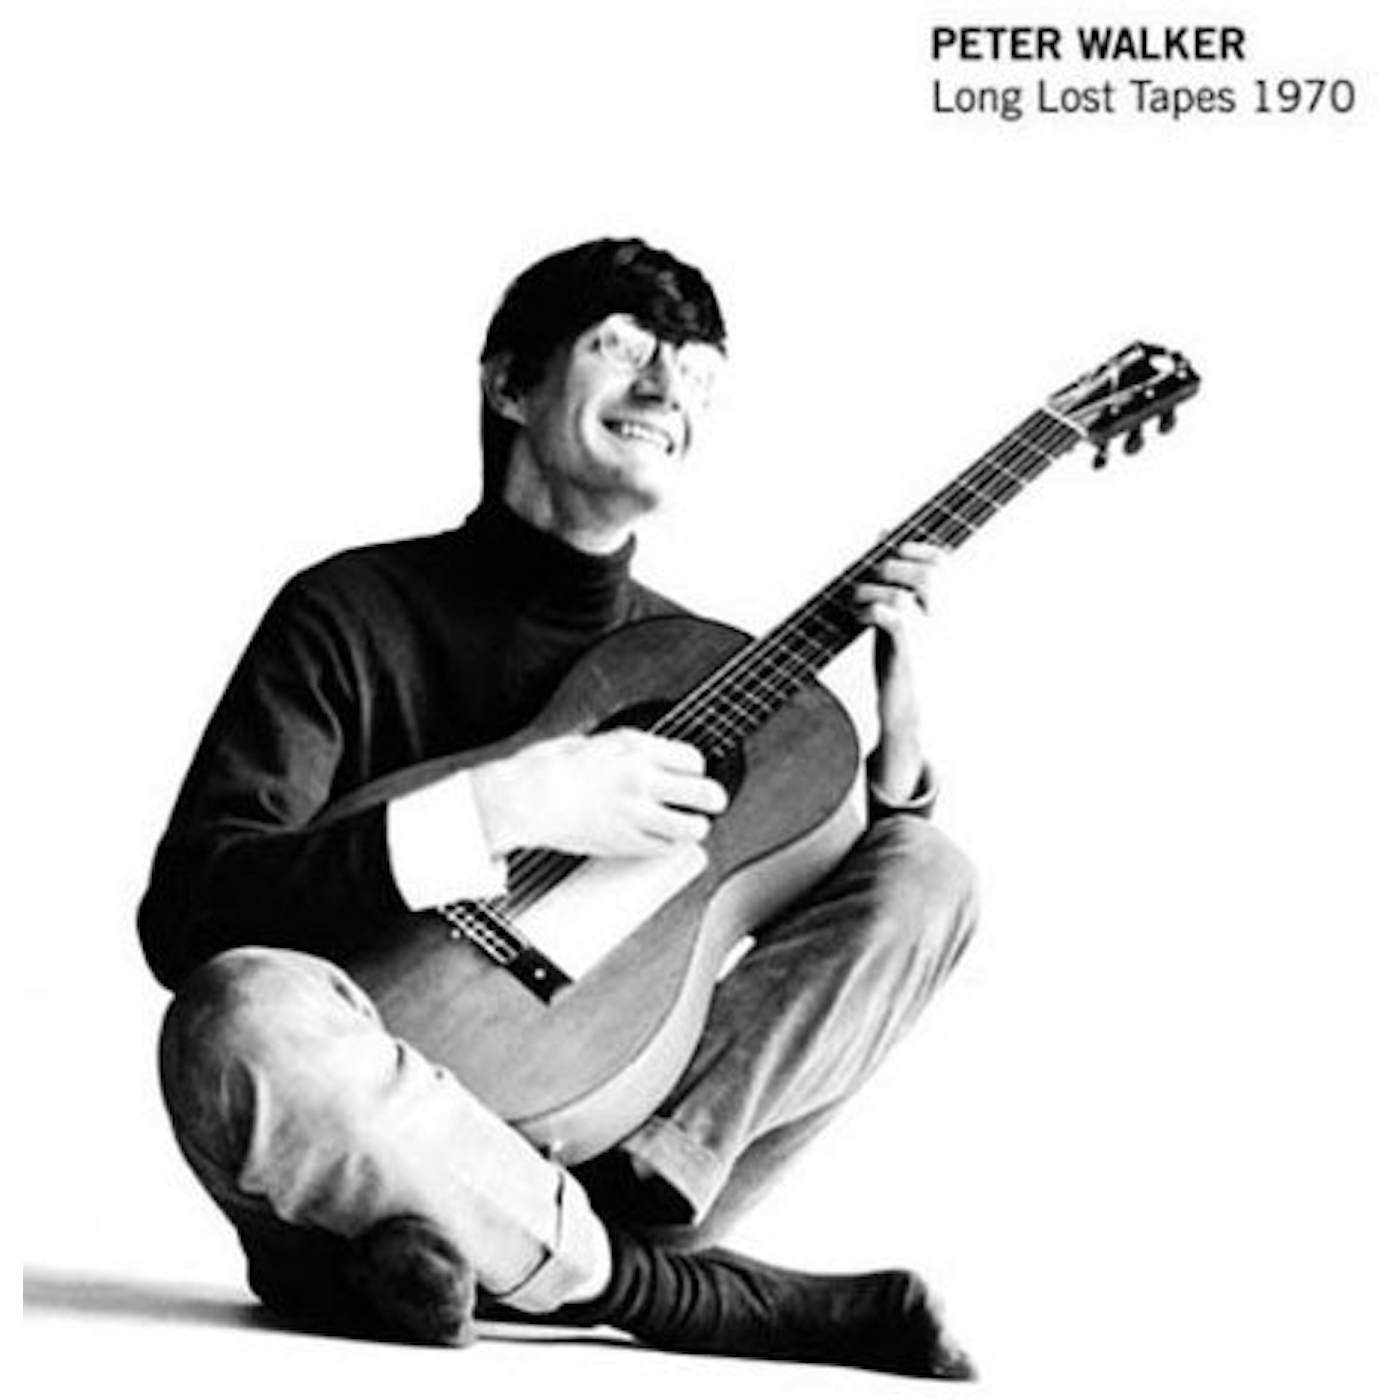 Peter Walker Long Lost Tapes 1970 Vinyl Record